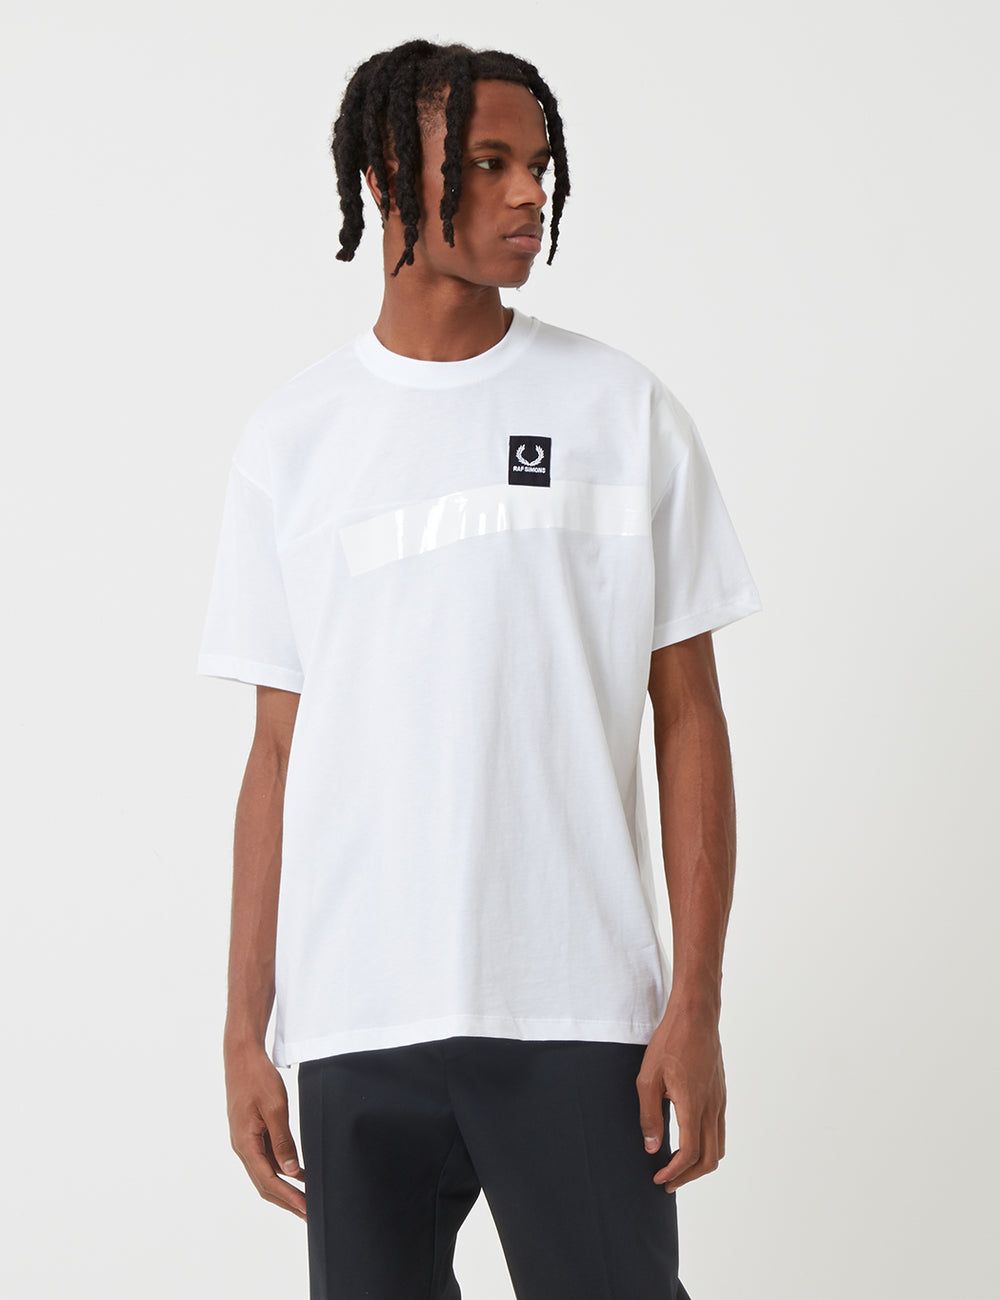 Fred Perry x Raf Simons Tape Detail T-Shirt - White | URBAN EXCESS